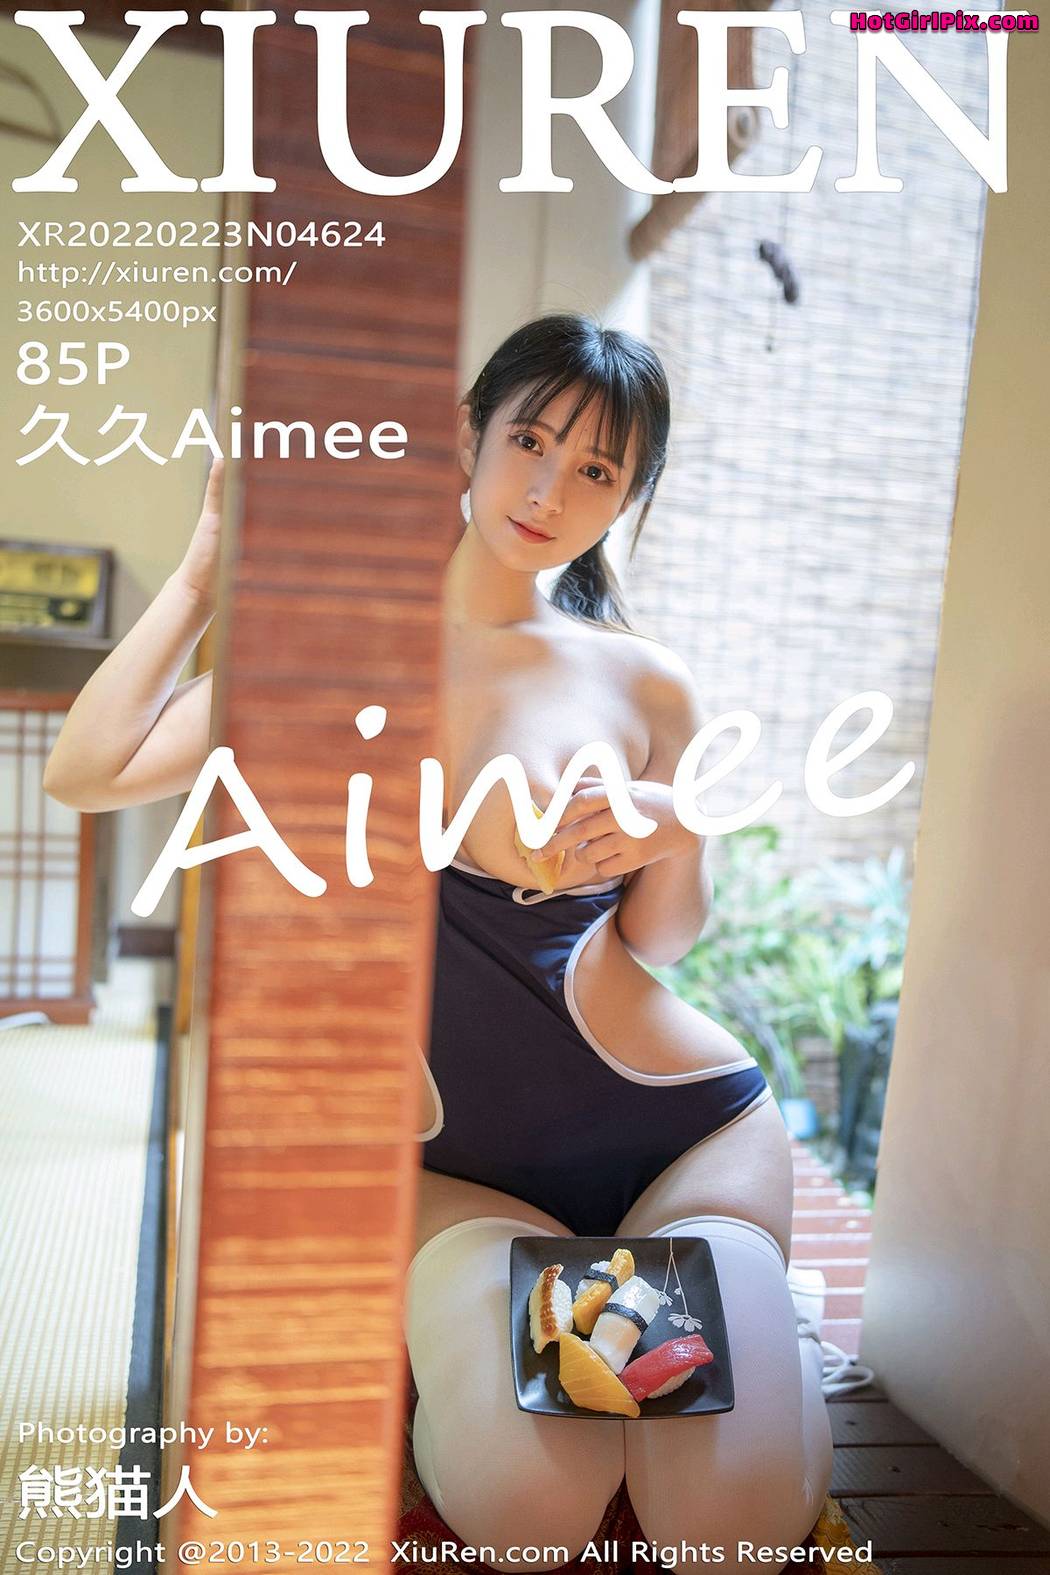 [XIUREN] No.4624 久久Aimee Cover Photo